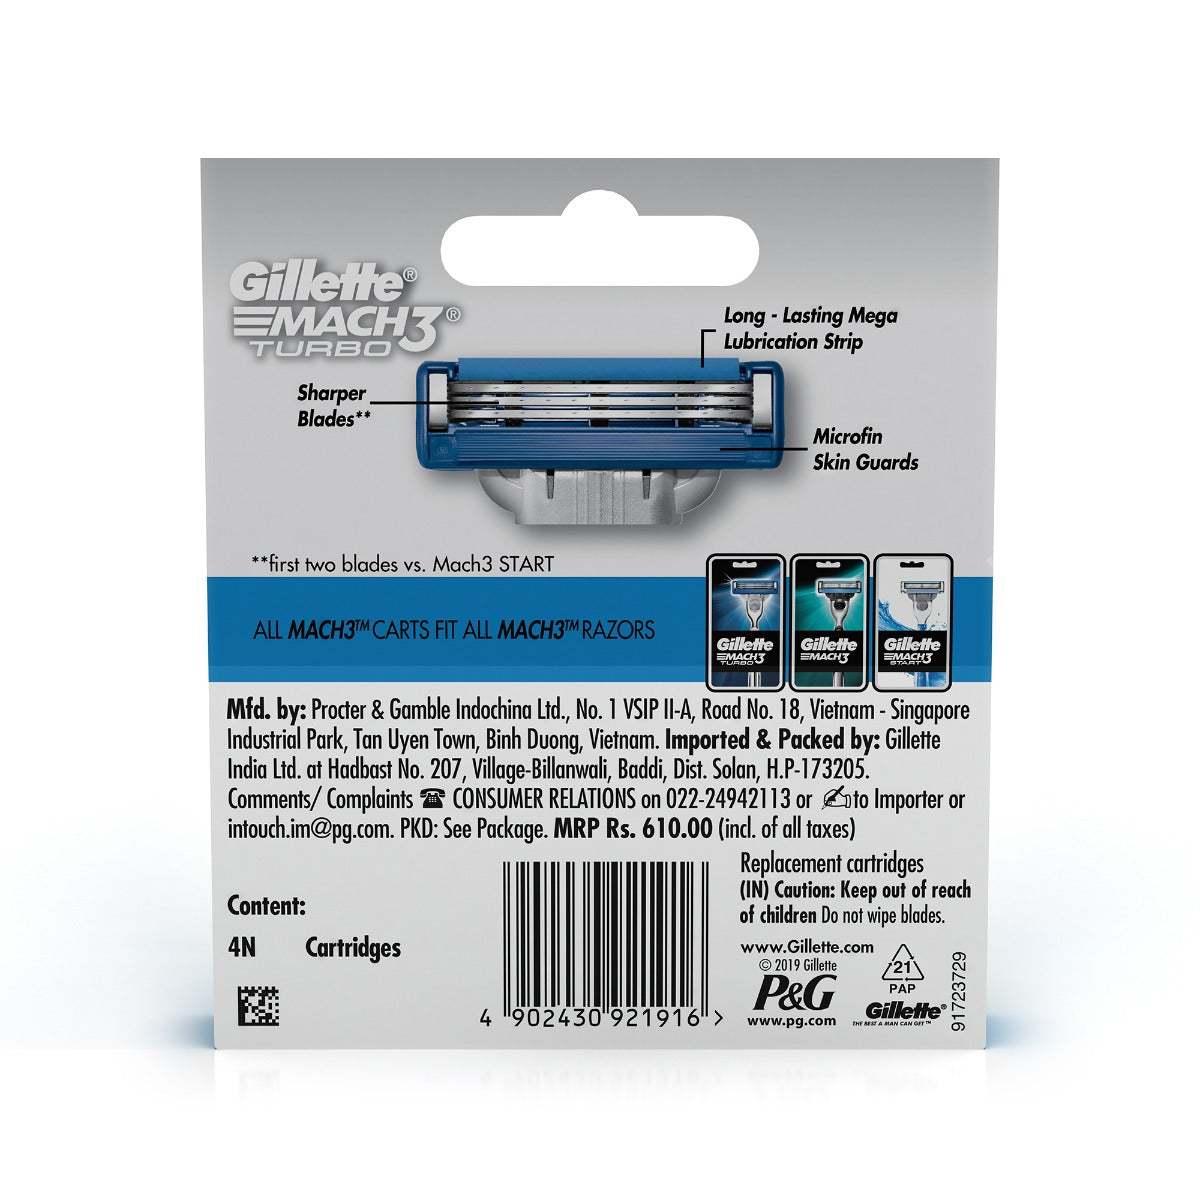 Gillette Mach3 Turbo Manual Shaving Razor Blades - 4s Pack (Cartridge)